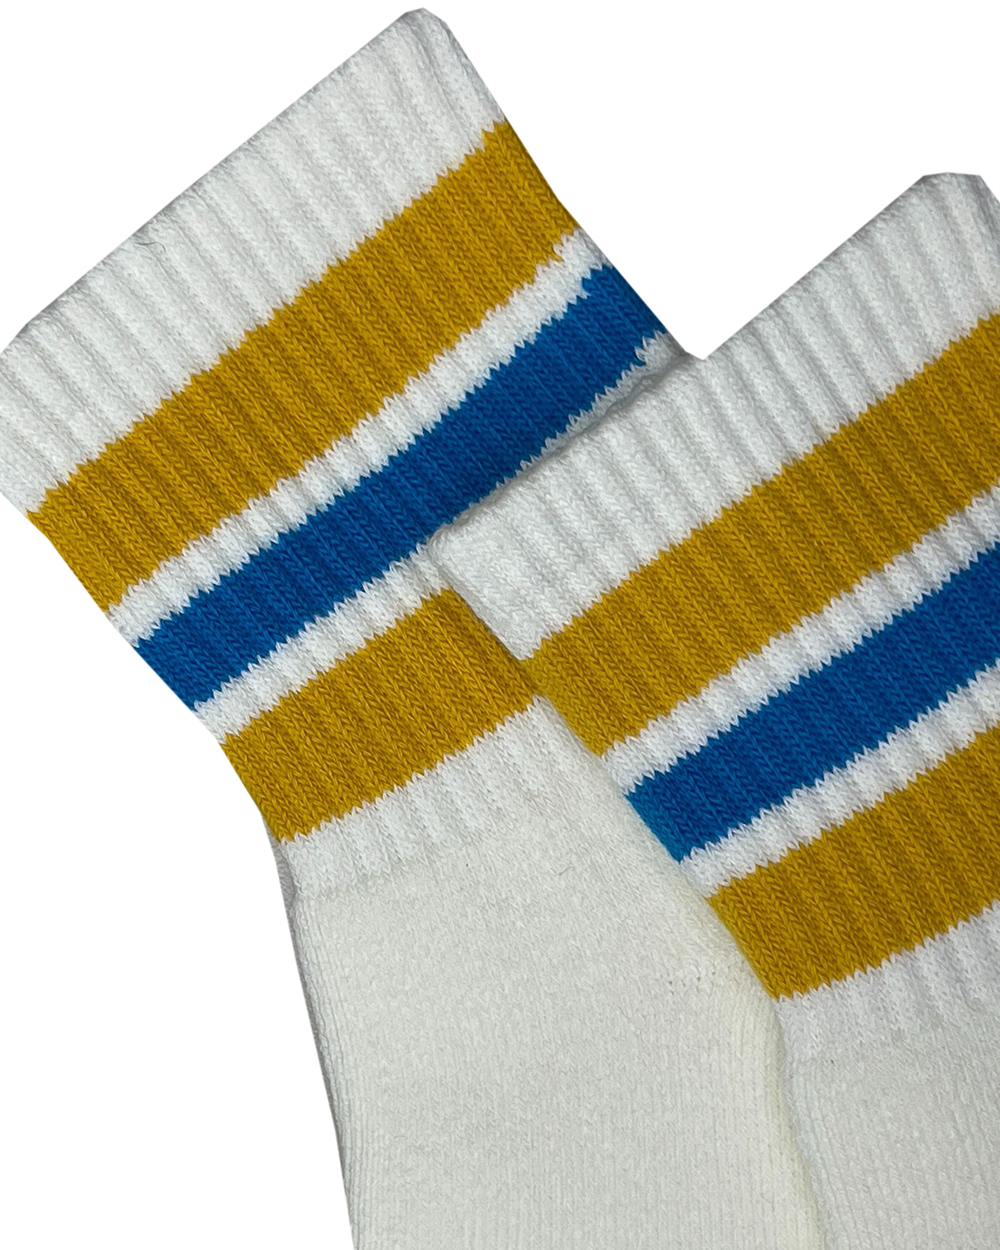 Varsity Socks - Team Yellow/White [4606]